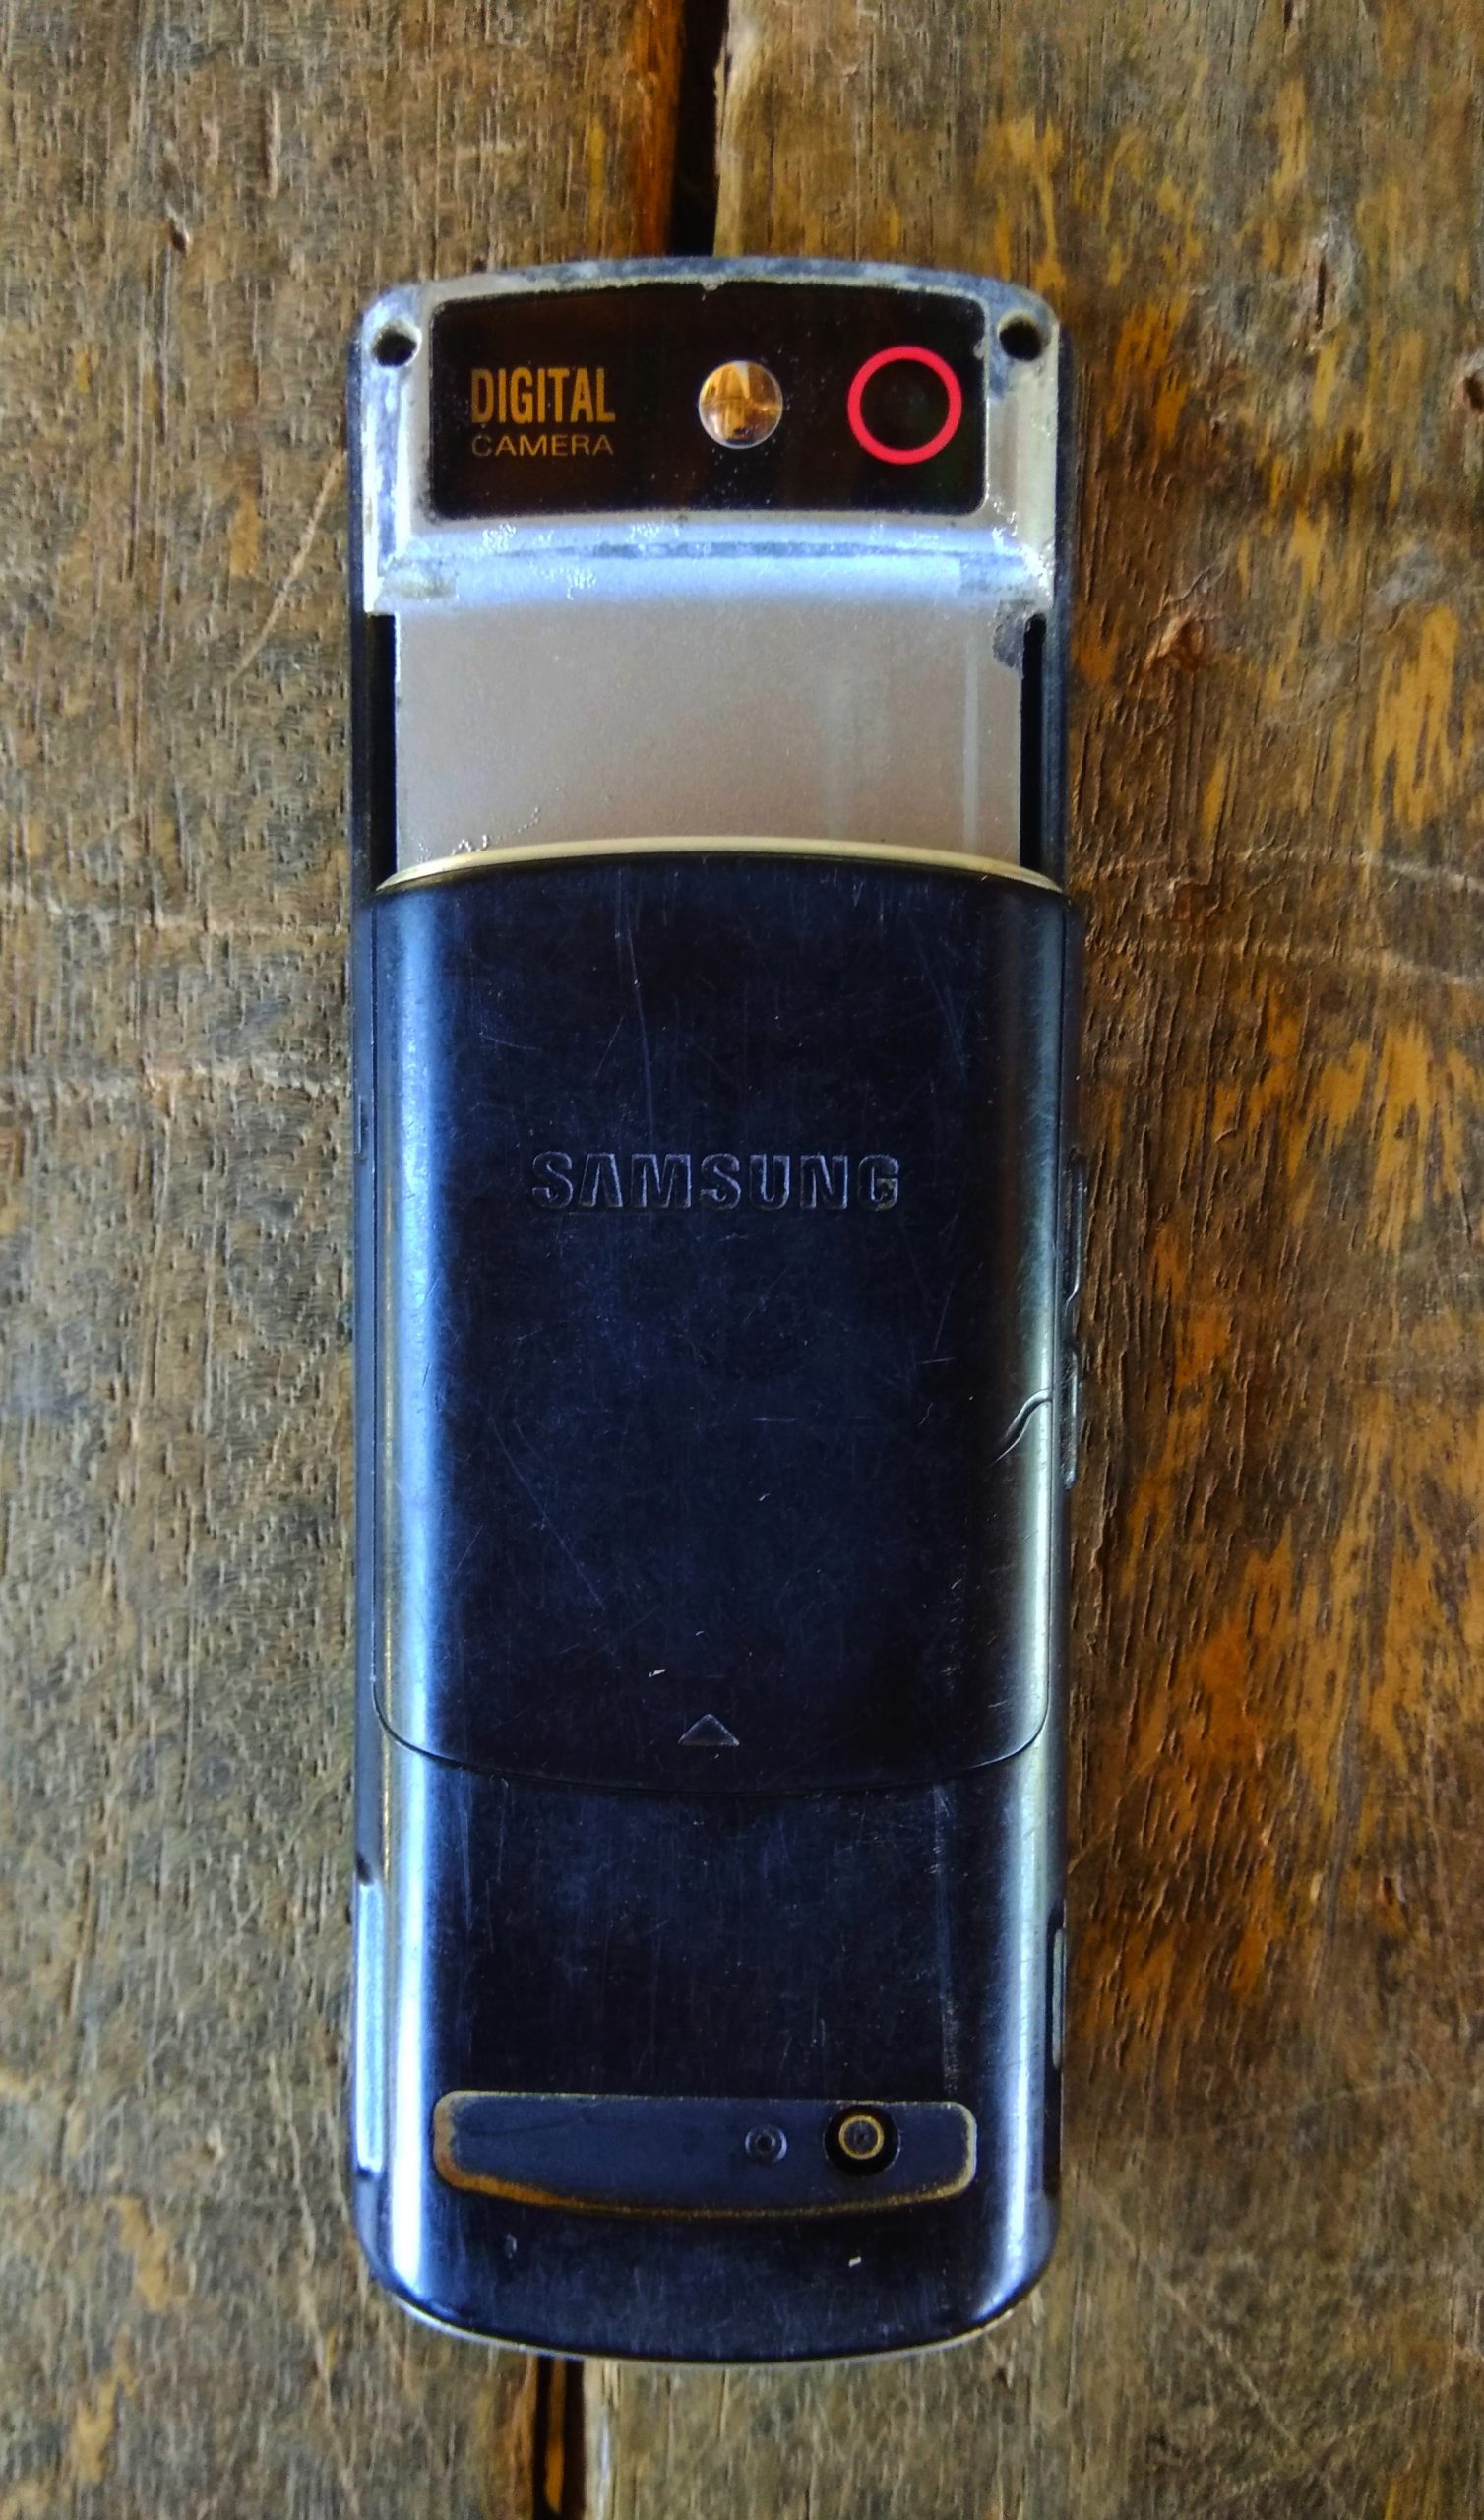 A Samsung mobile phone